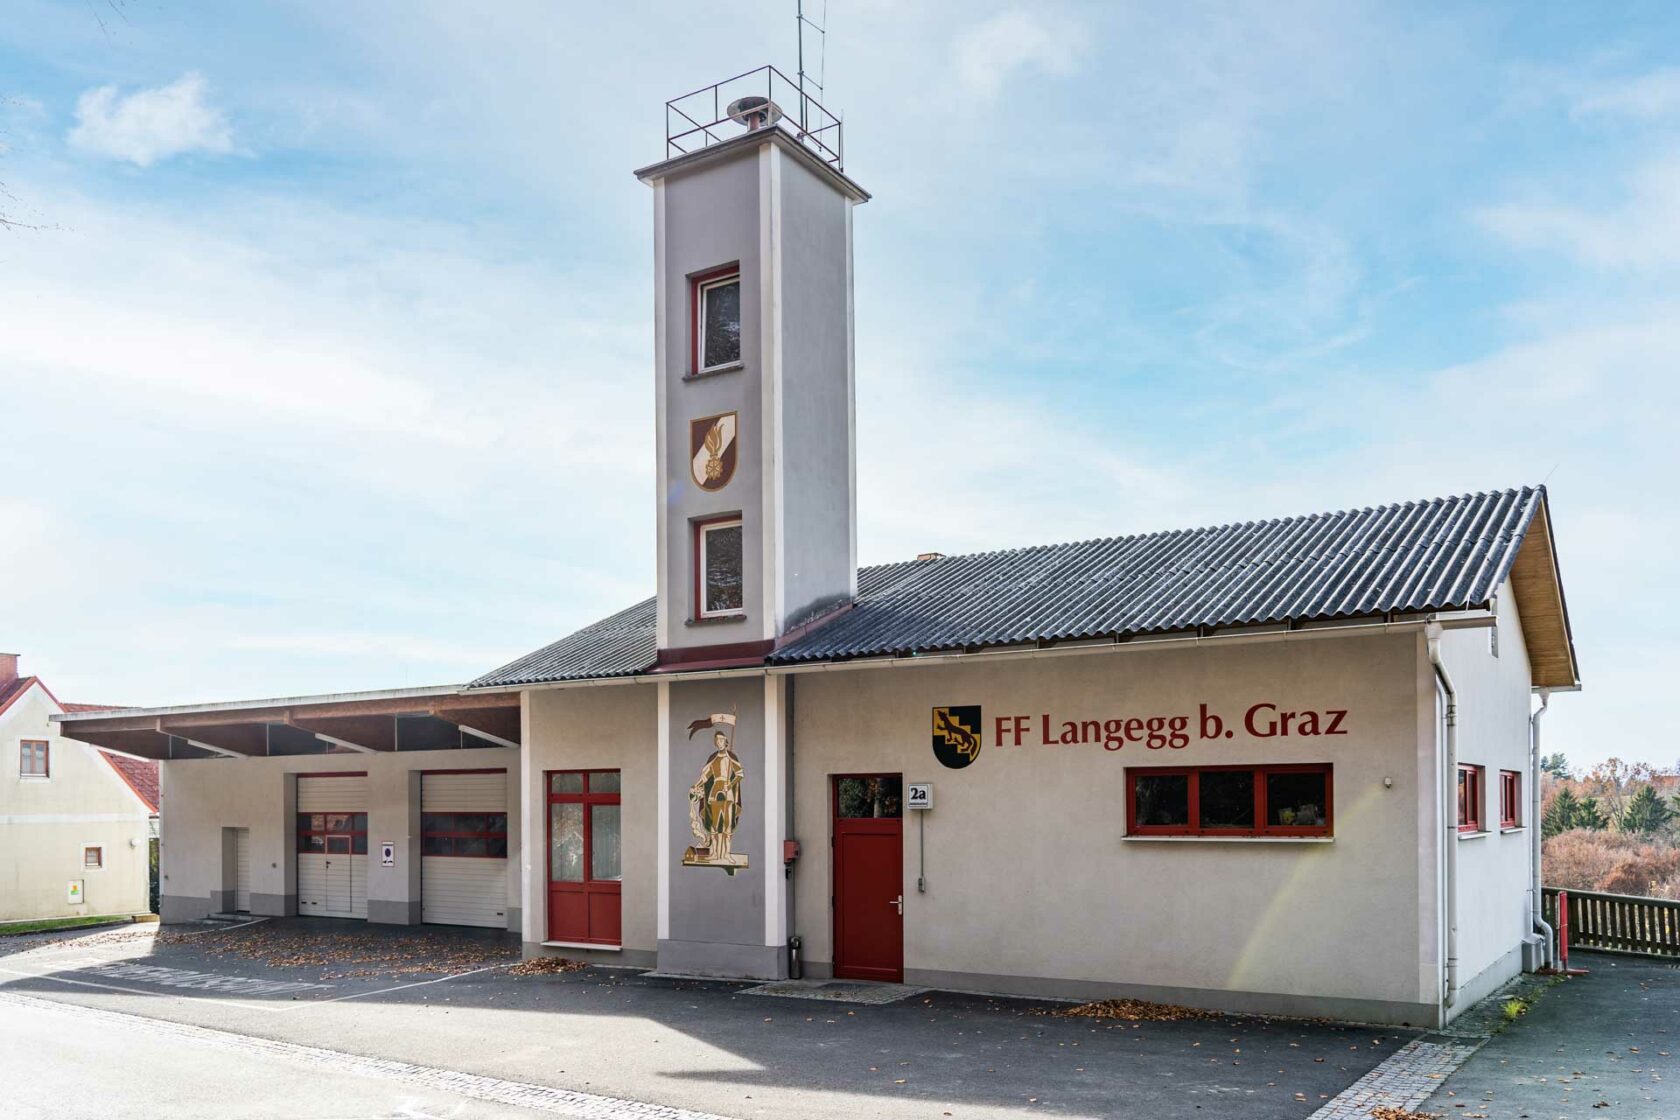 Feuerwehrhaus Langegg bei Graz